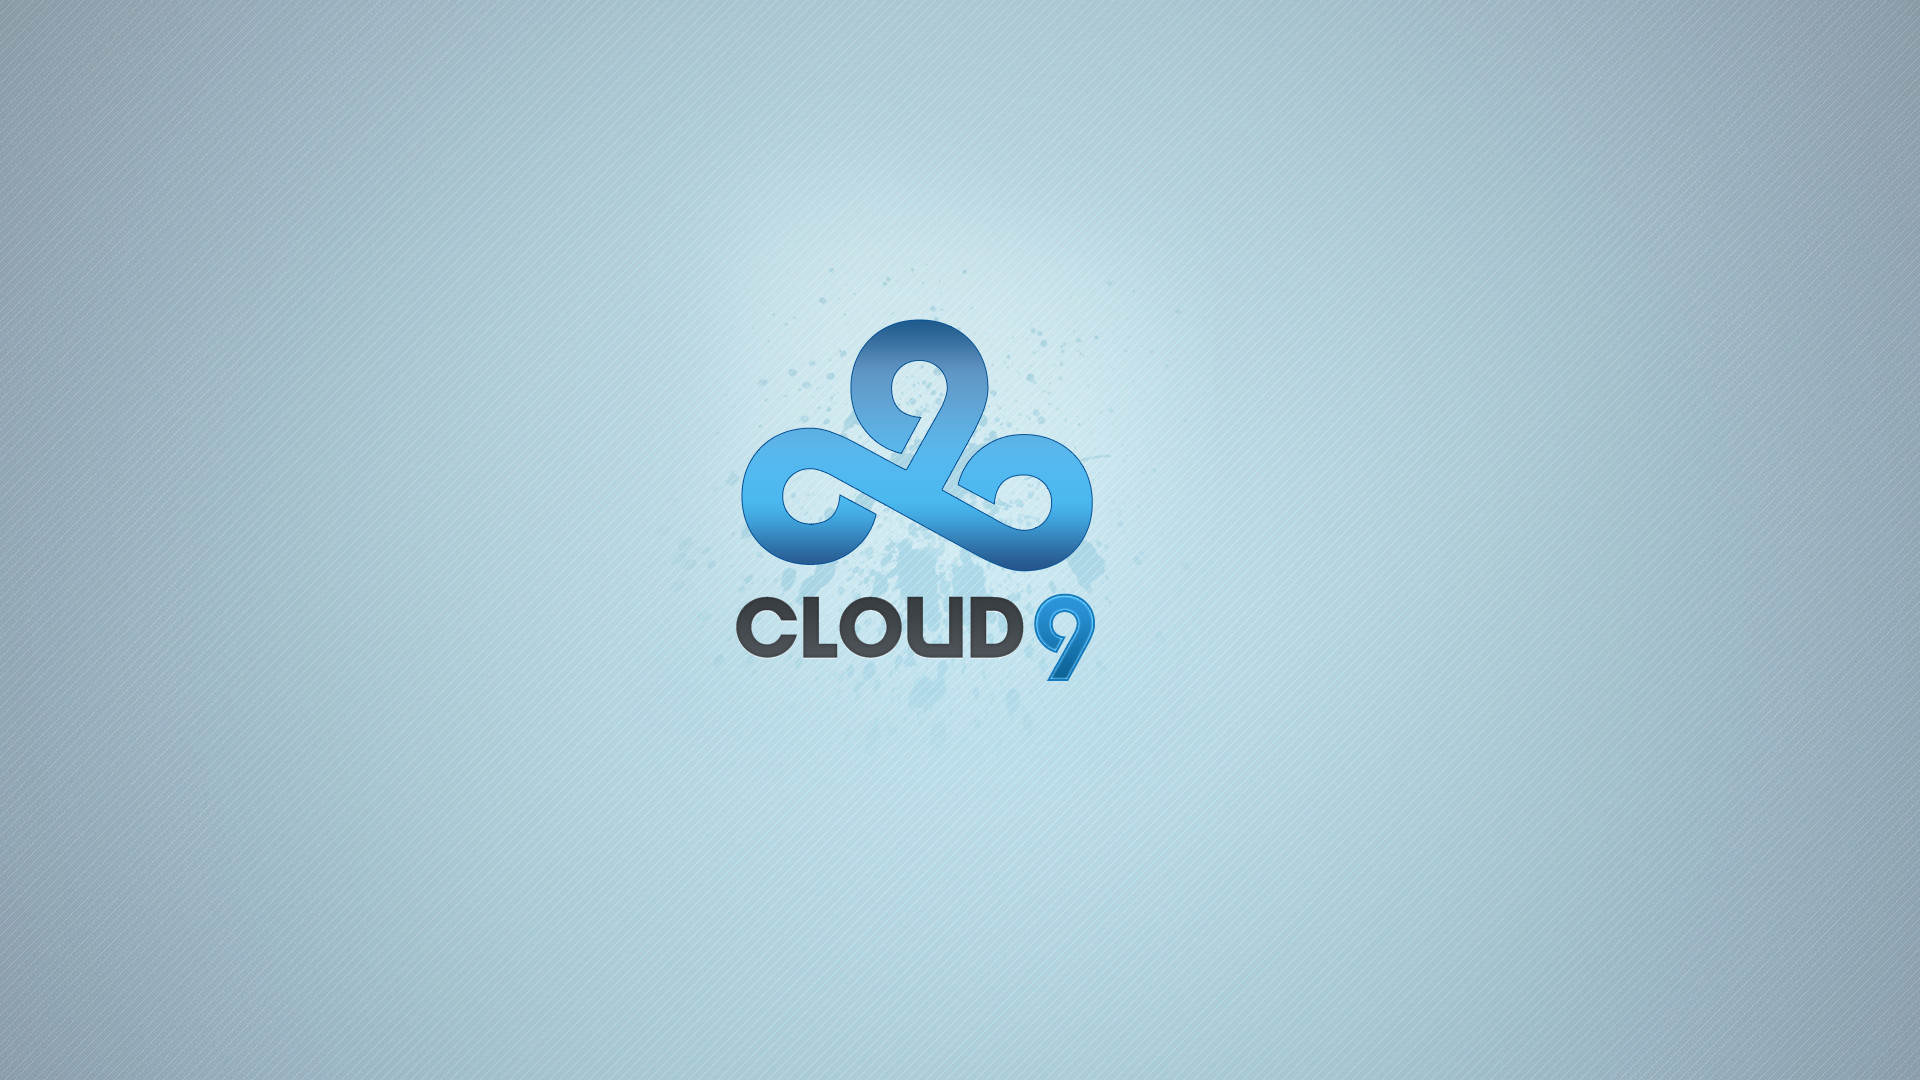 1920x1080 ... Cloud9: http://i.imgur.com/Y2eUrc2.png ...